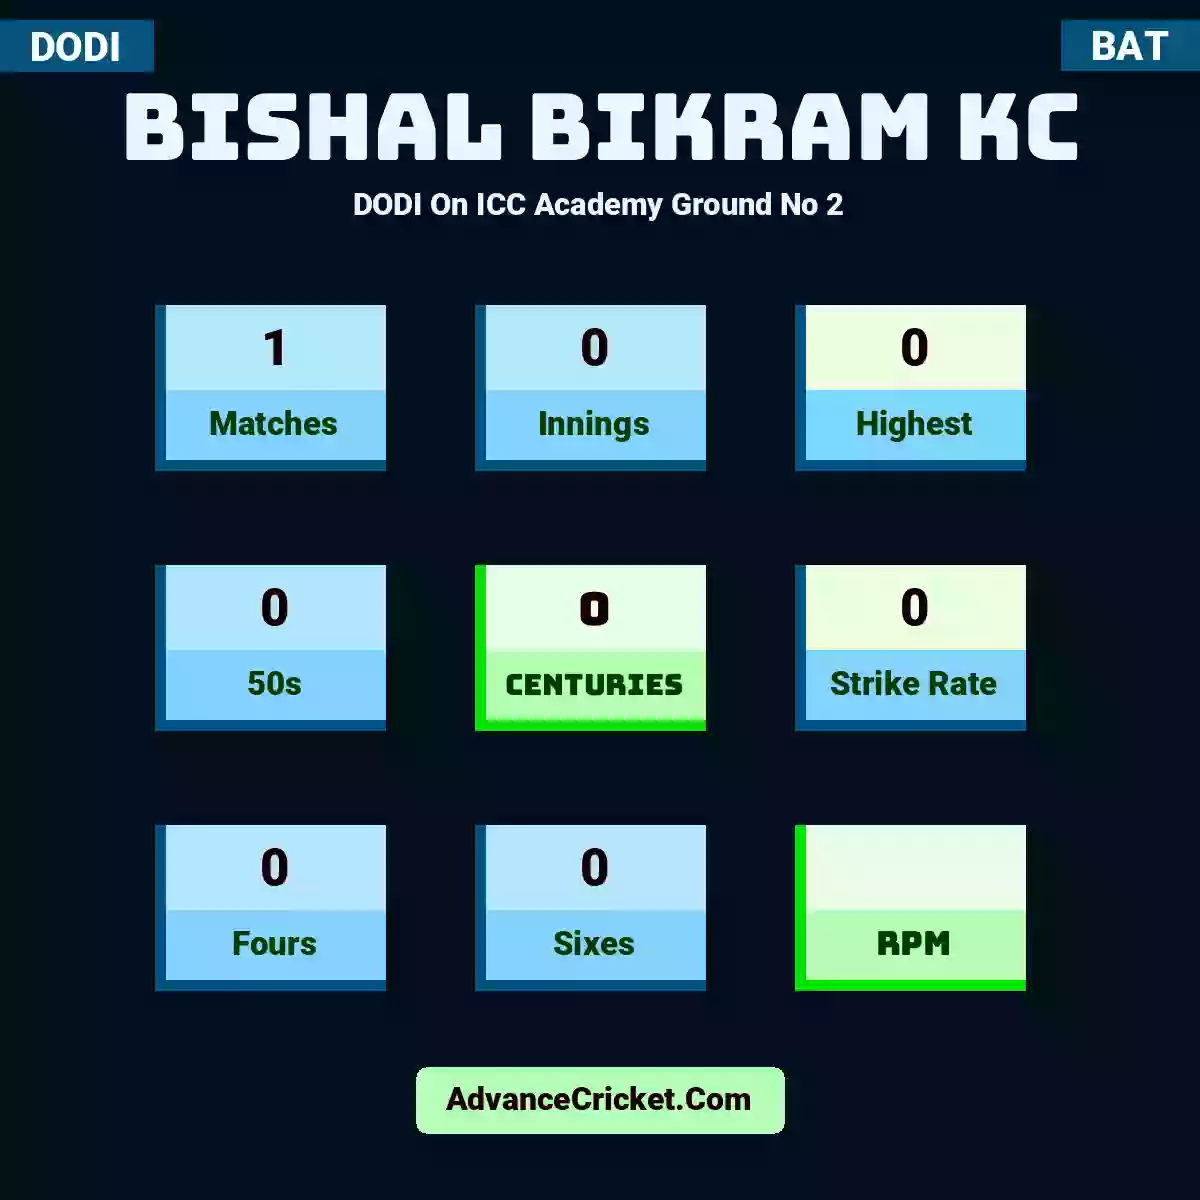 Bishal Bikram KC DODI  On ICC Academy Ground No 2, Bishal Bikram KC played 1 matches, scored 0 runs as highest, 0 half-centuries, and 0 centuries, with a strike rate of 0. B.Bikram.KC hit 0 fours and 0 sixes.